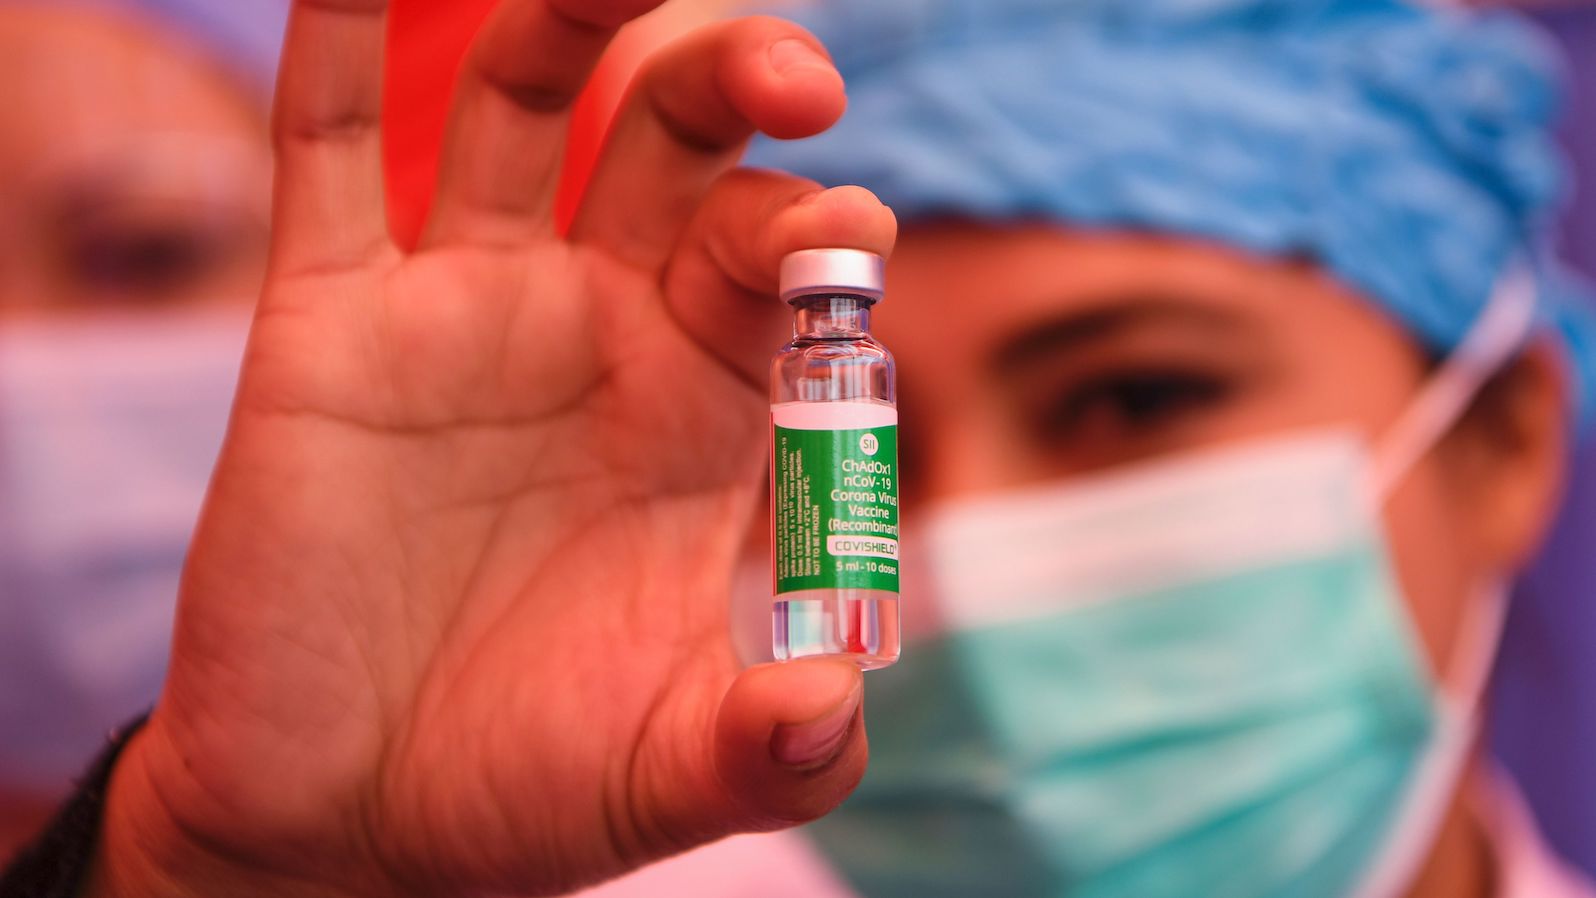 The AstraZeneca vaccine will reduce covid-19 transmission